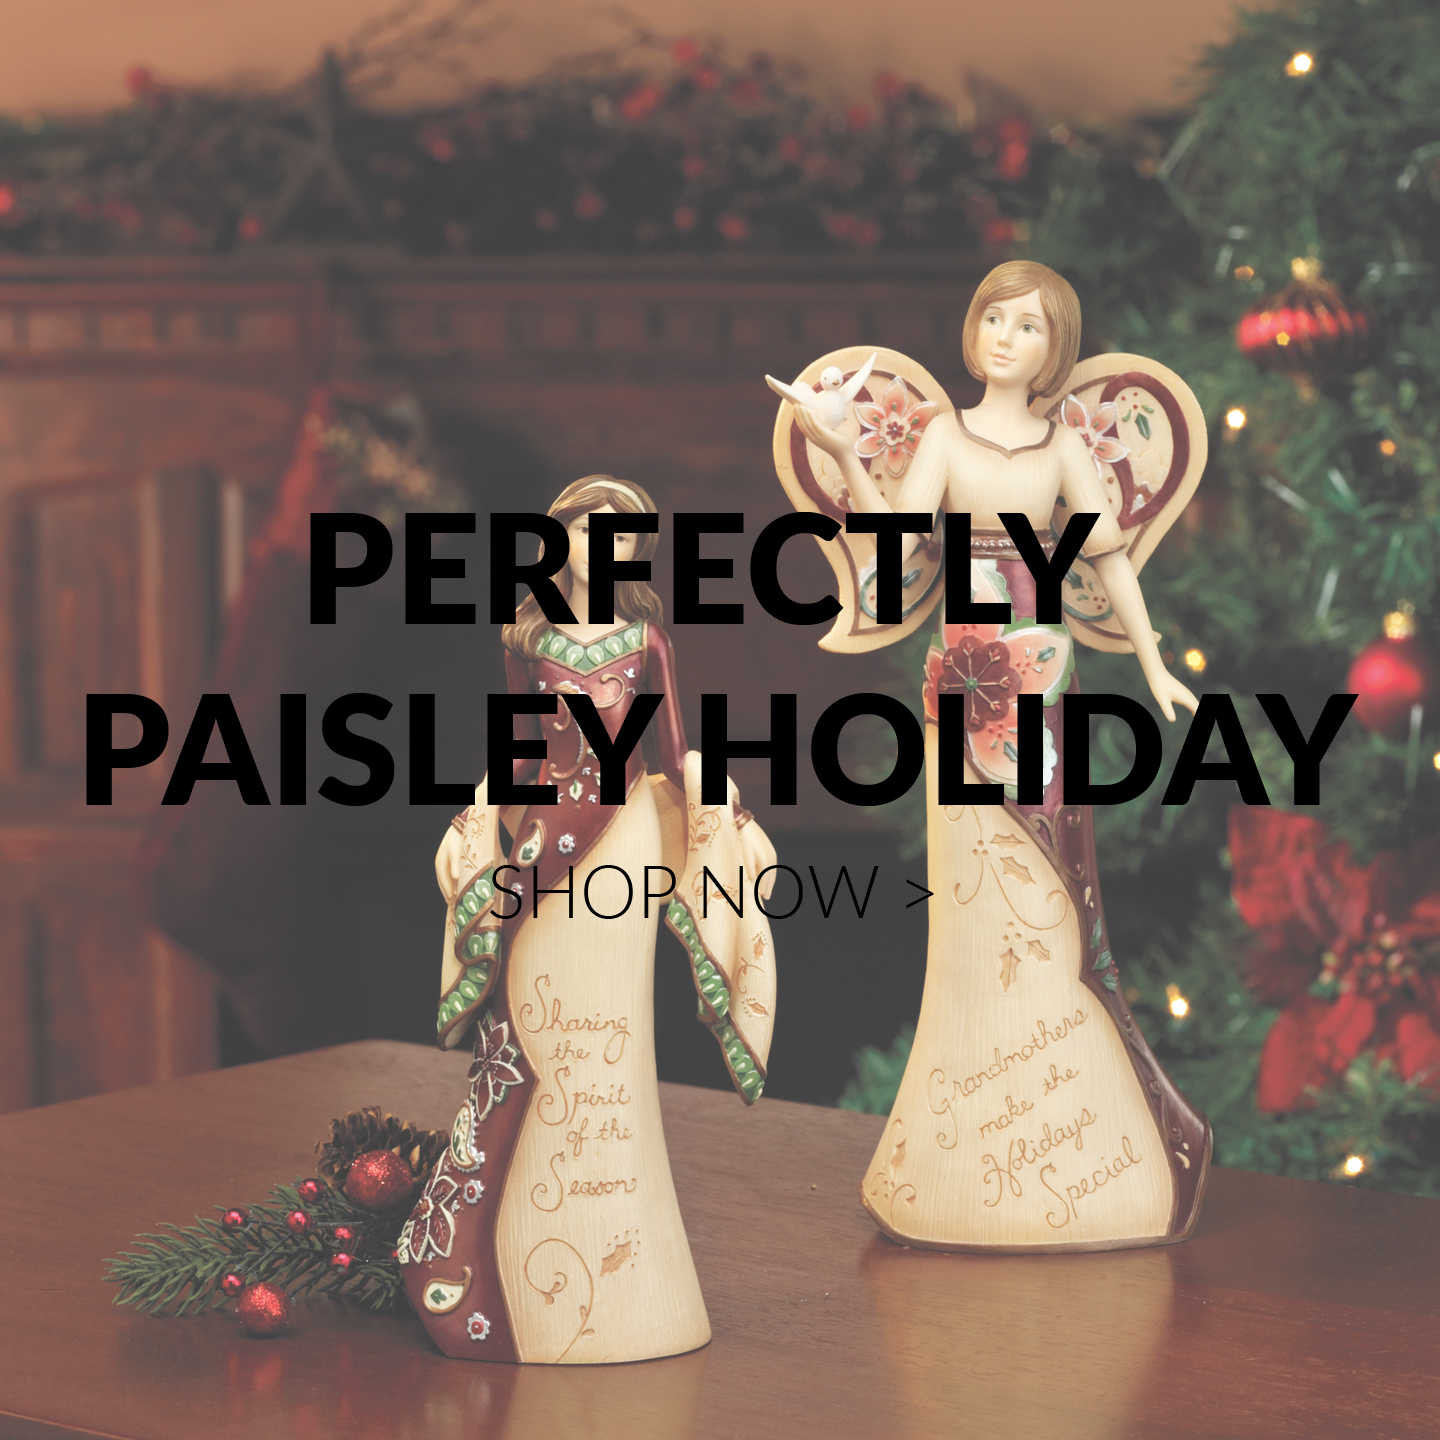 Perfectly Paisley Holiday